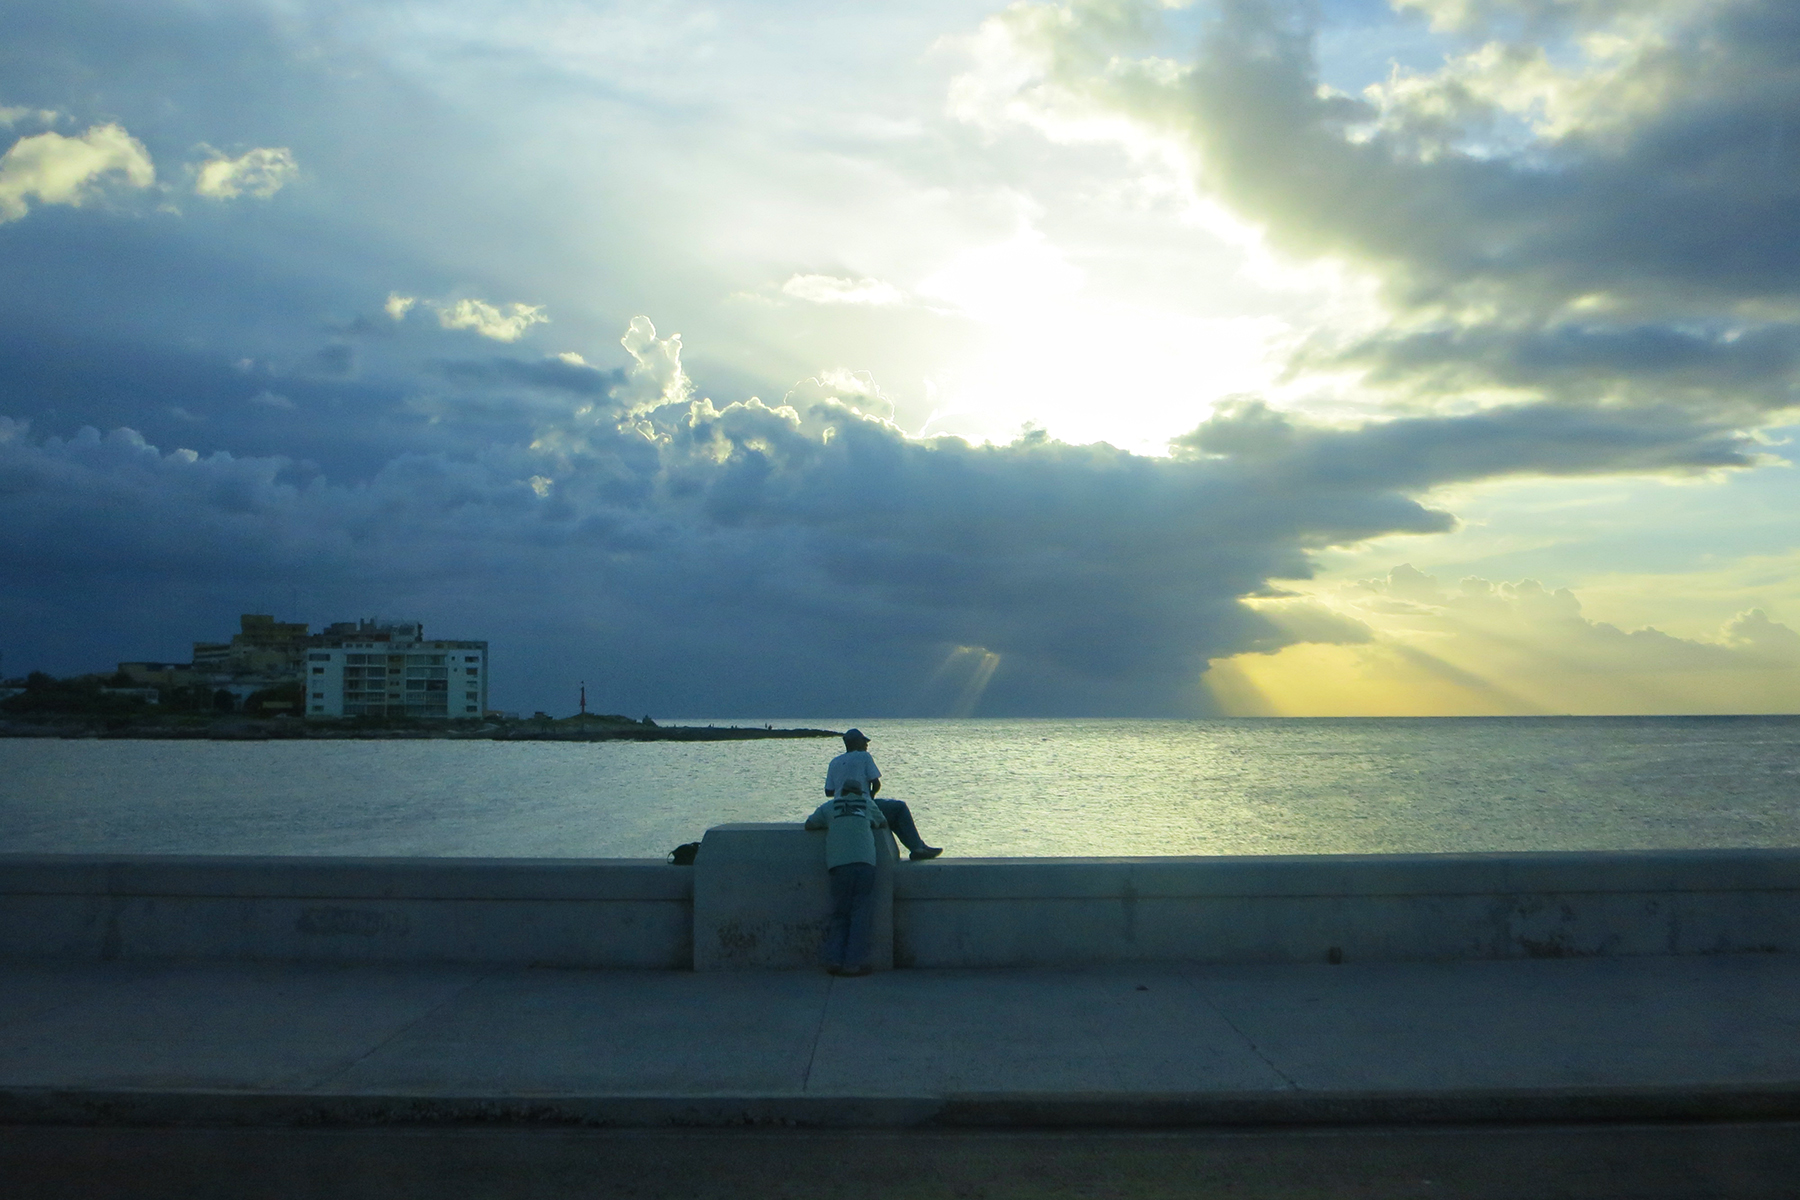 Rundreise Kuba: Kurztrip durch ein Kuba voller Kontraste